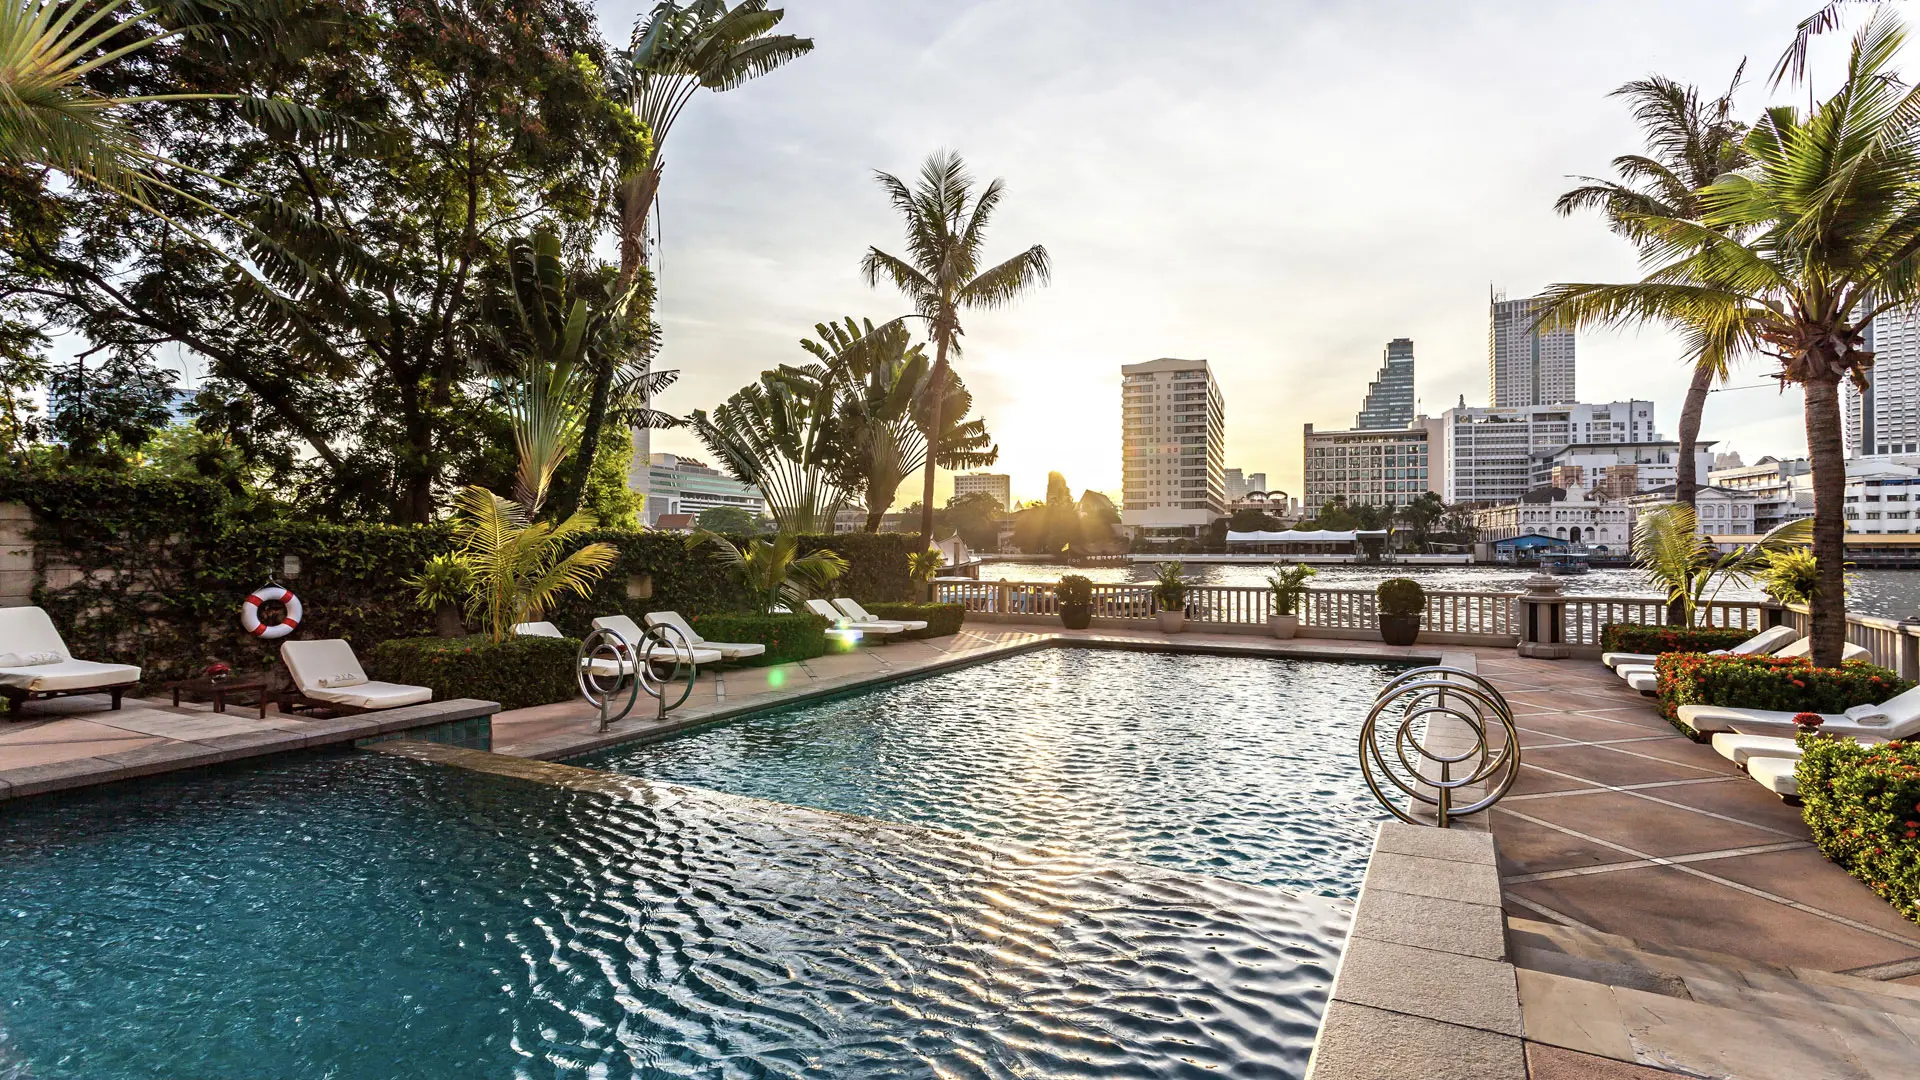 Hotel review Service & Facilities' - The Peninsula Bangkok - 2